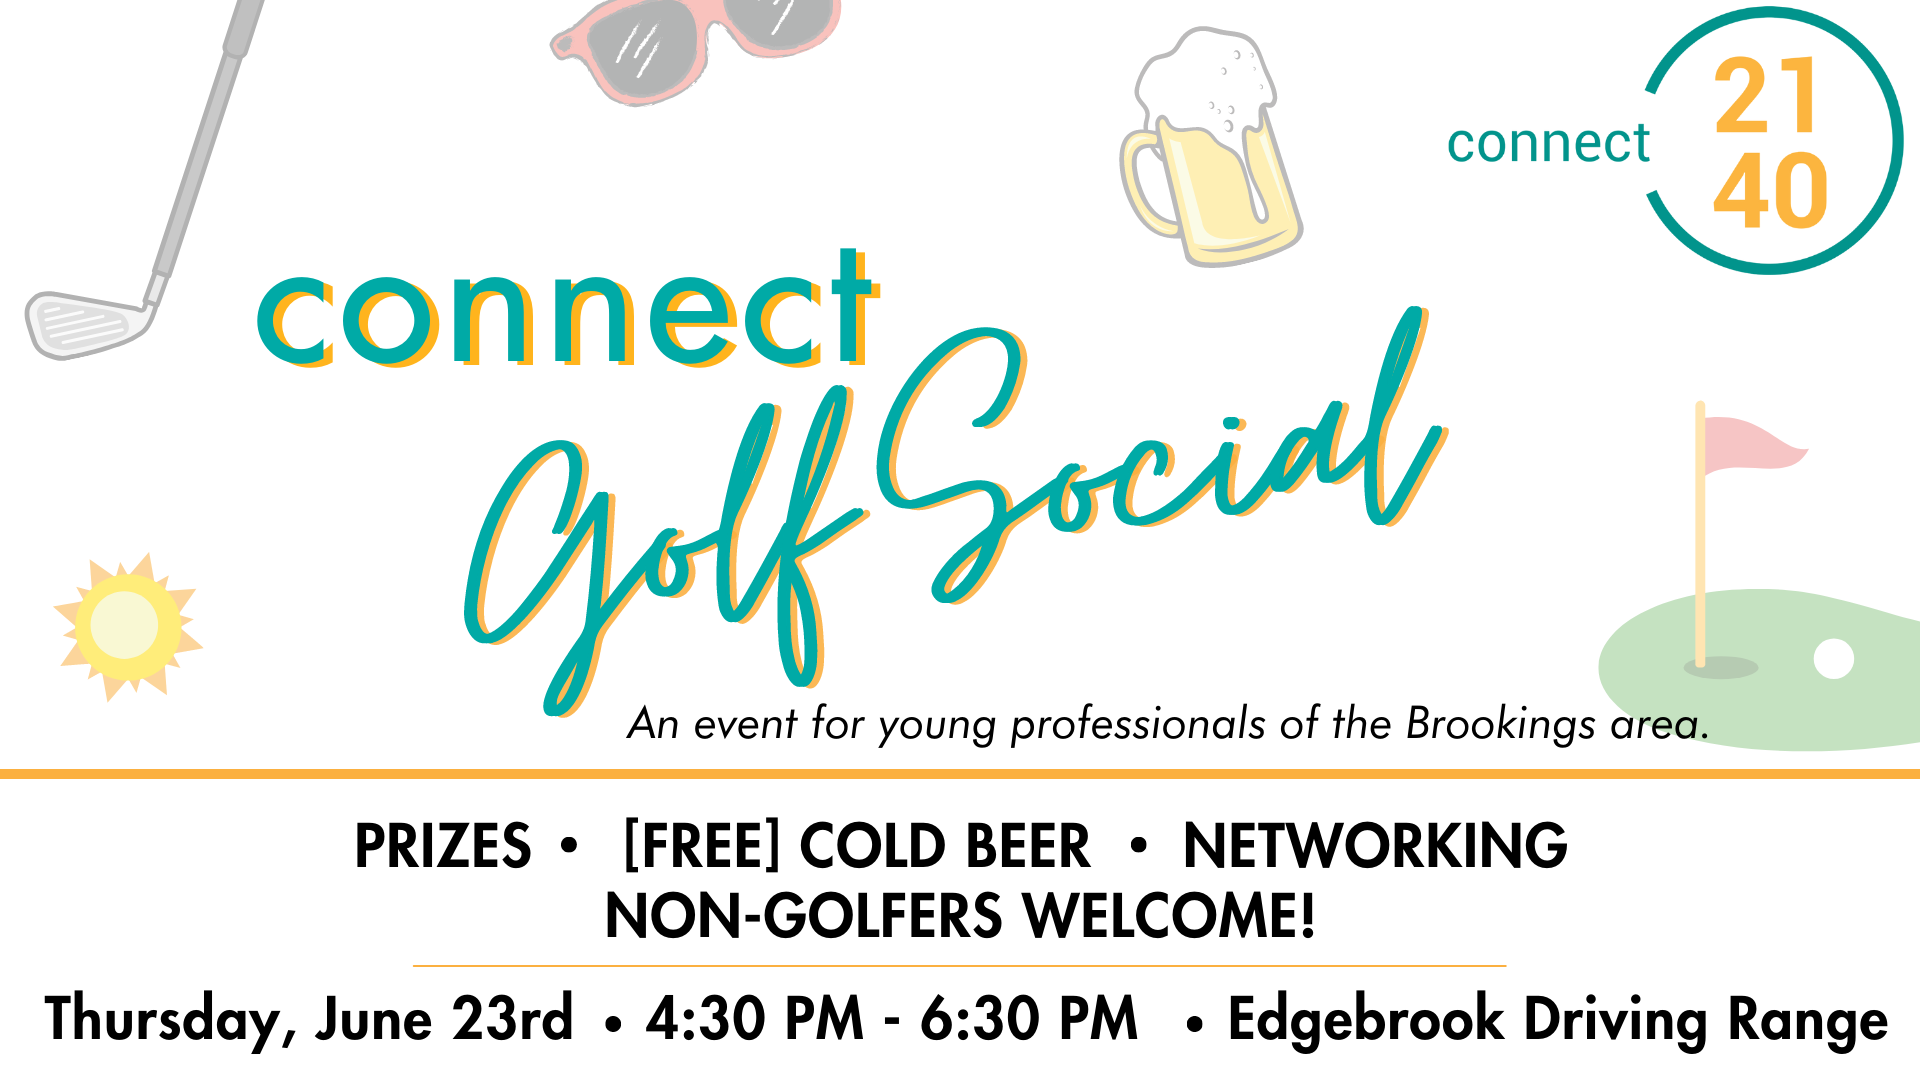 Connect 2140 Golf Social